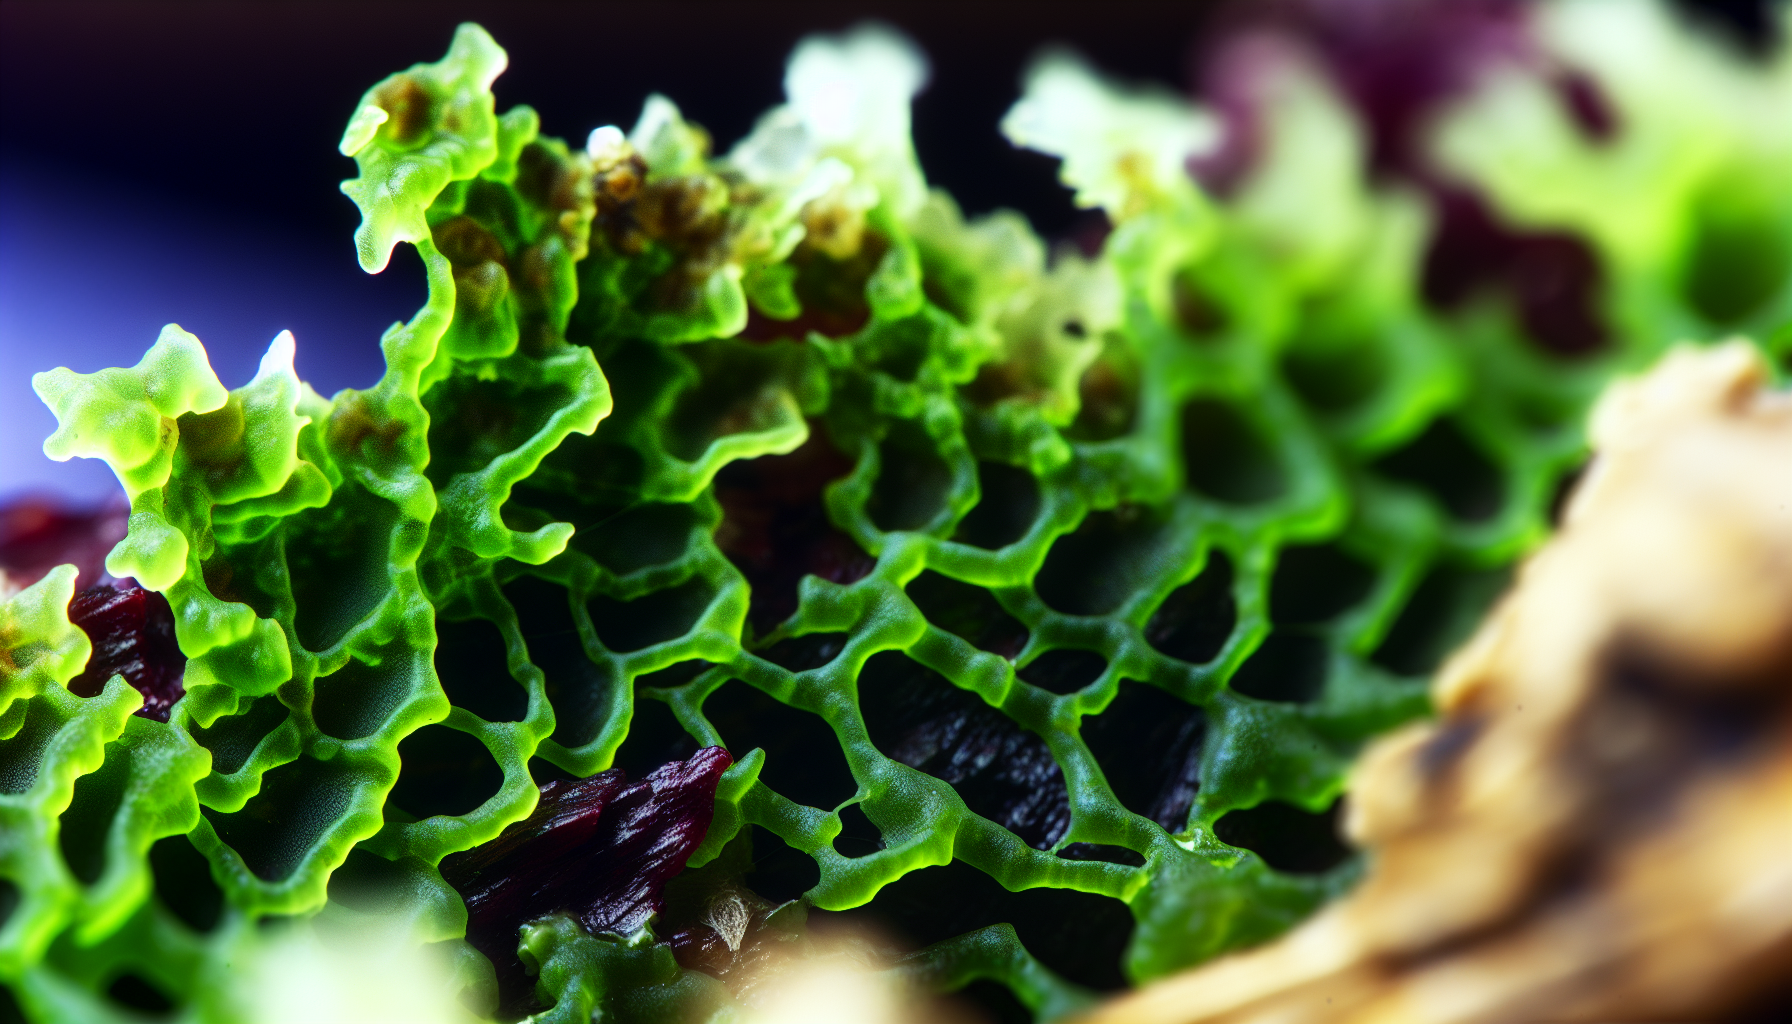 A close-up photo of raw sea moss